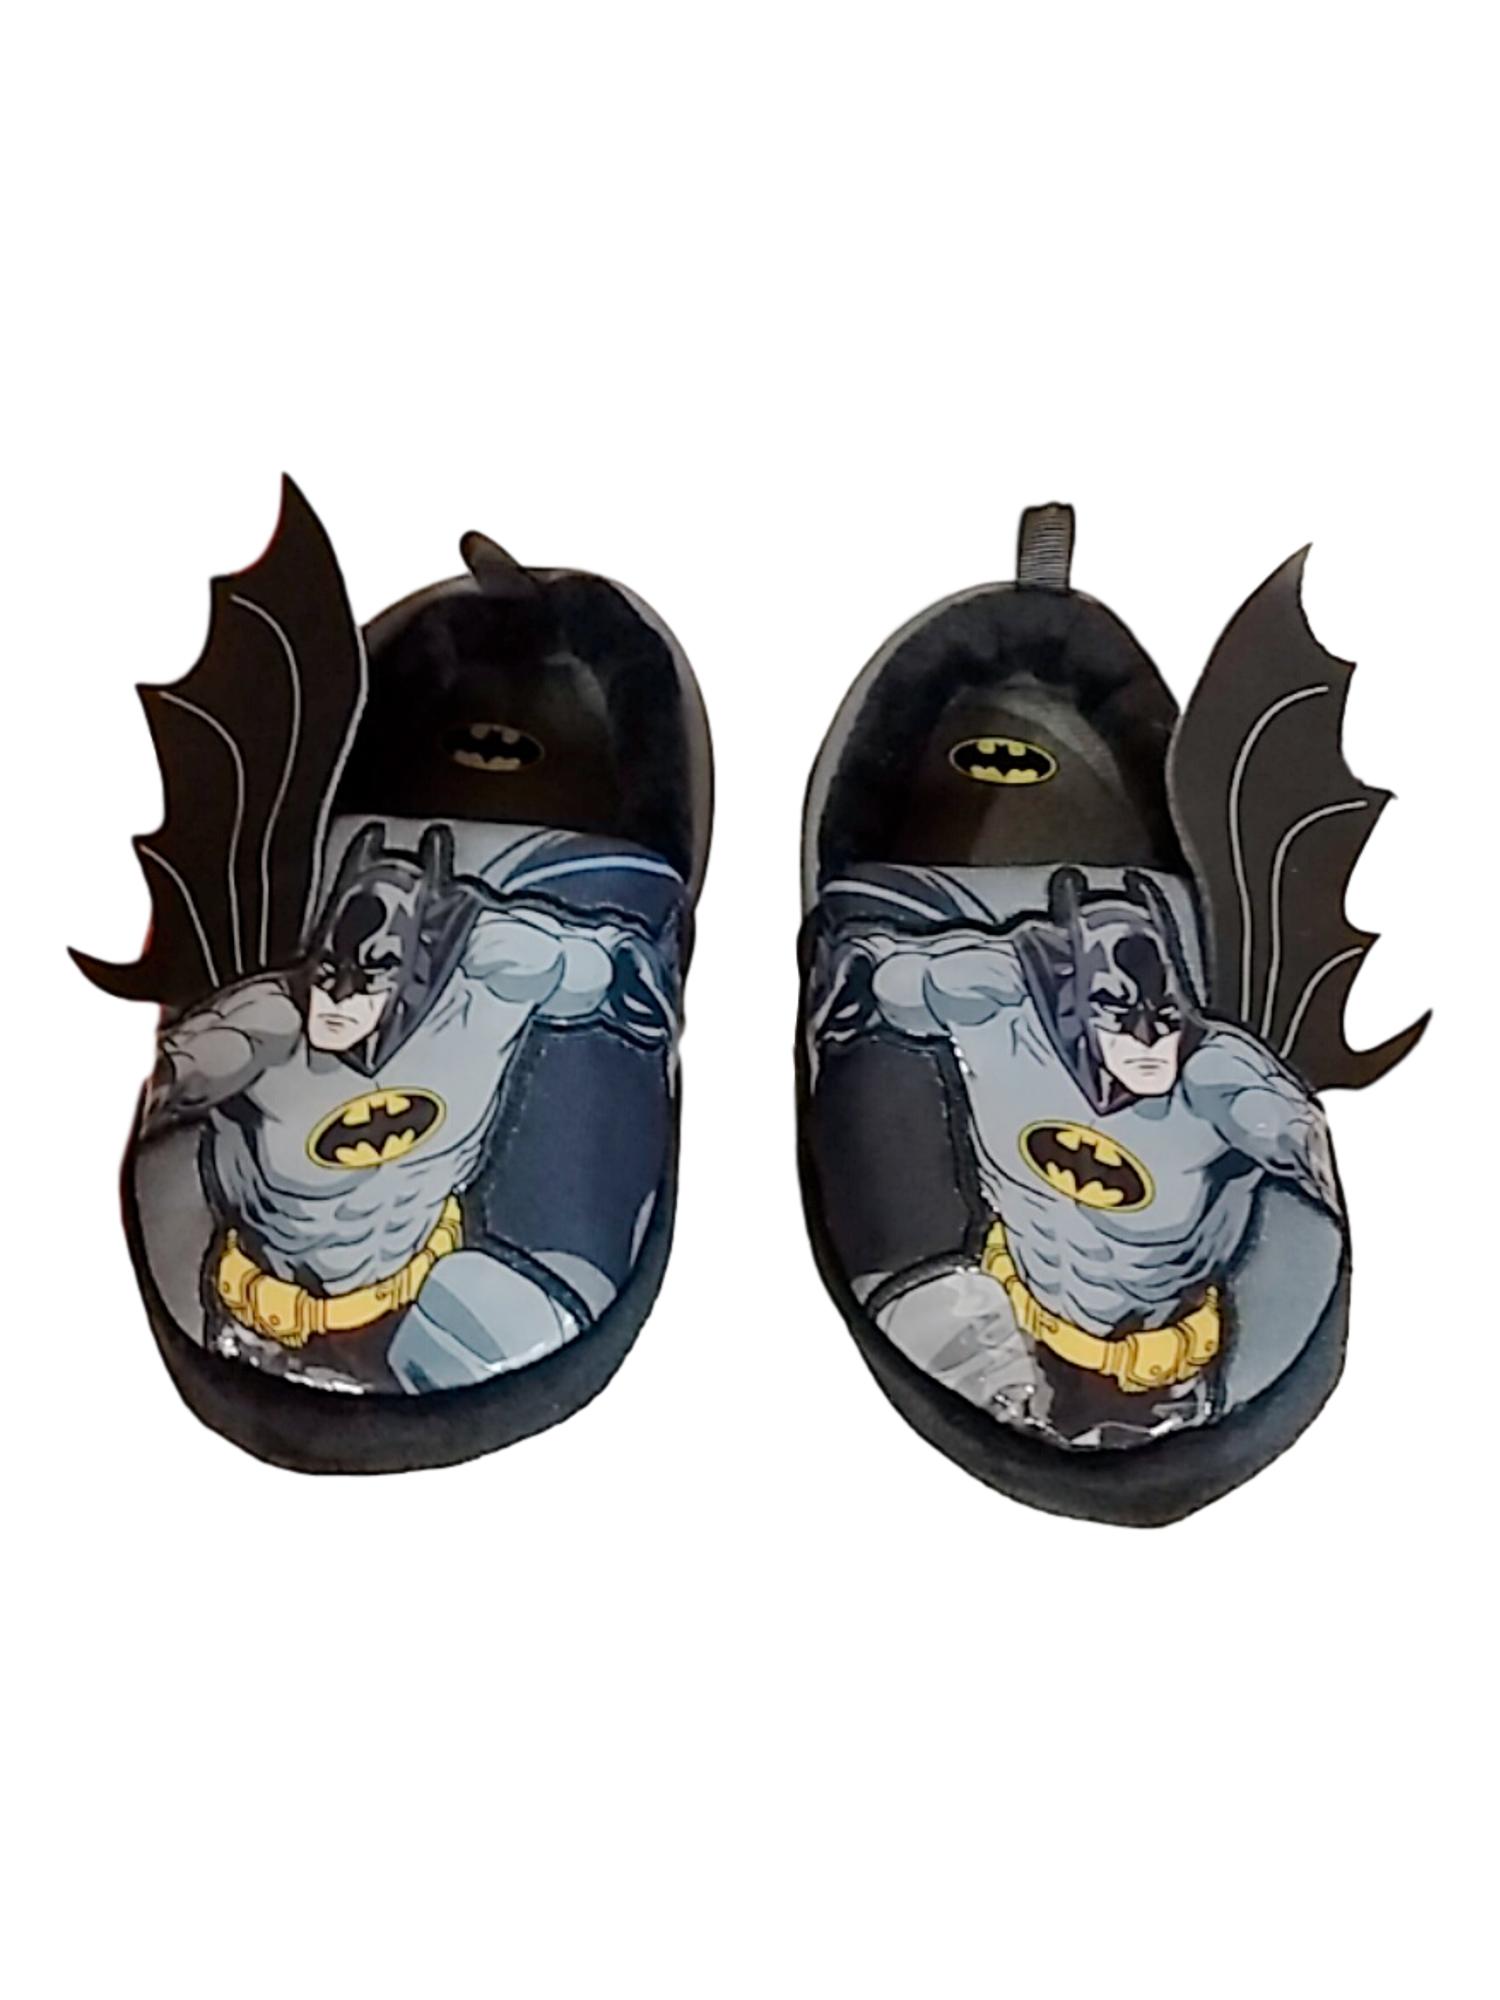 walmart batman slippers